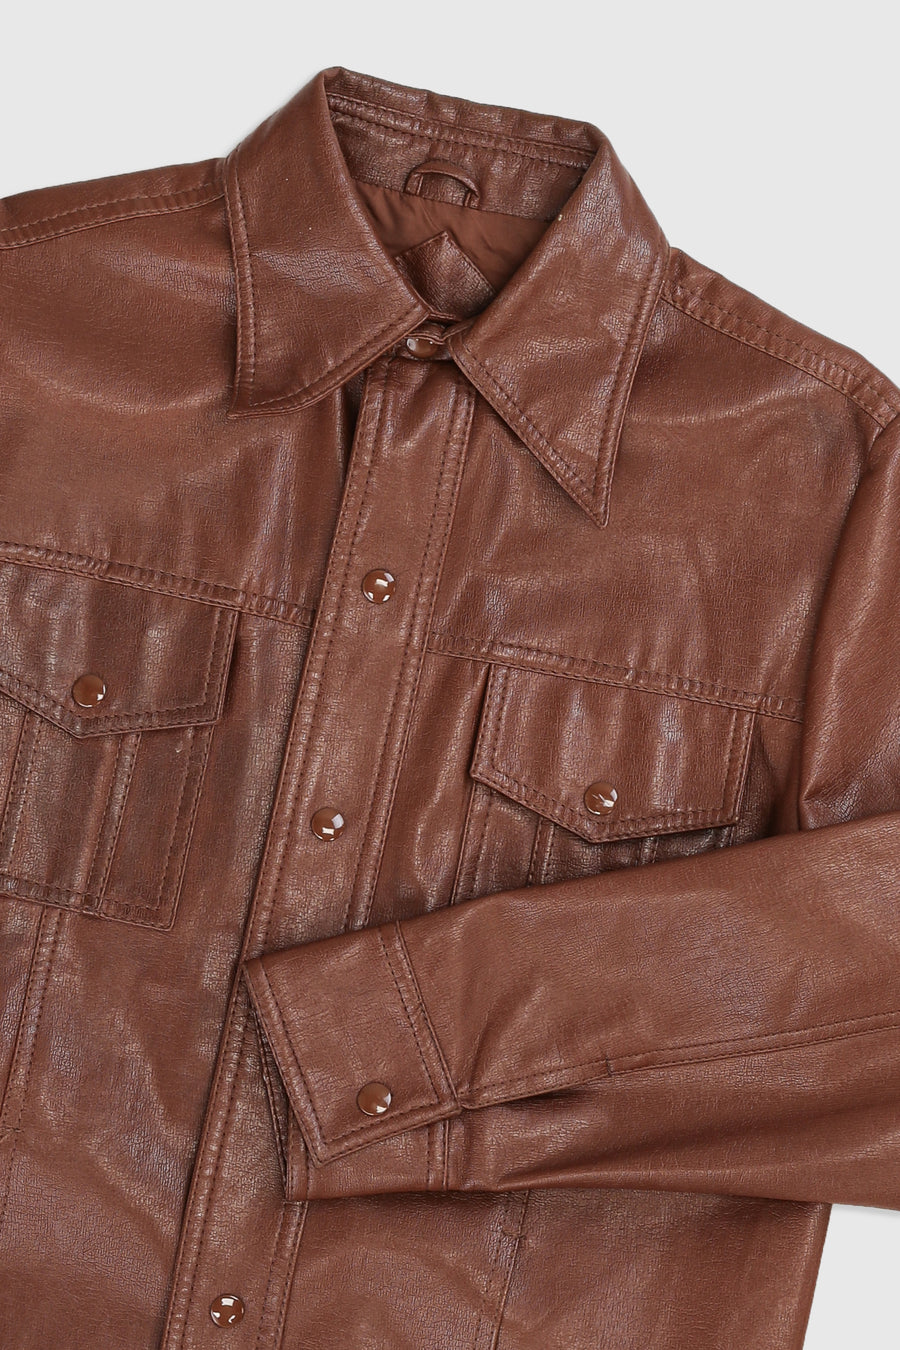 Vintage Leather Shirt